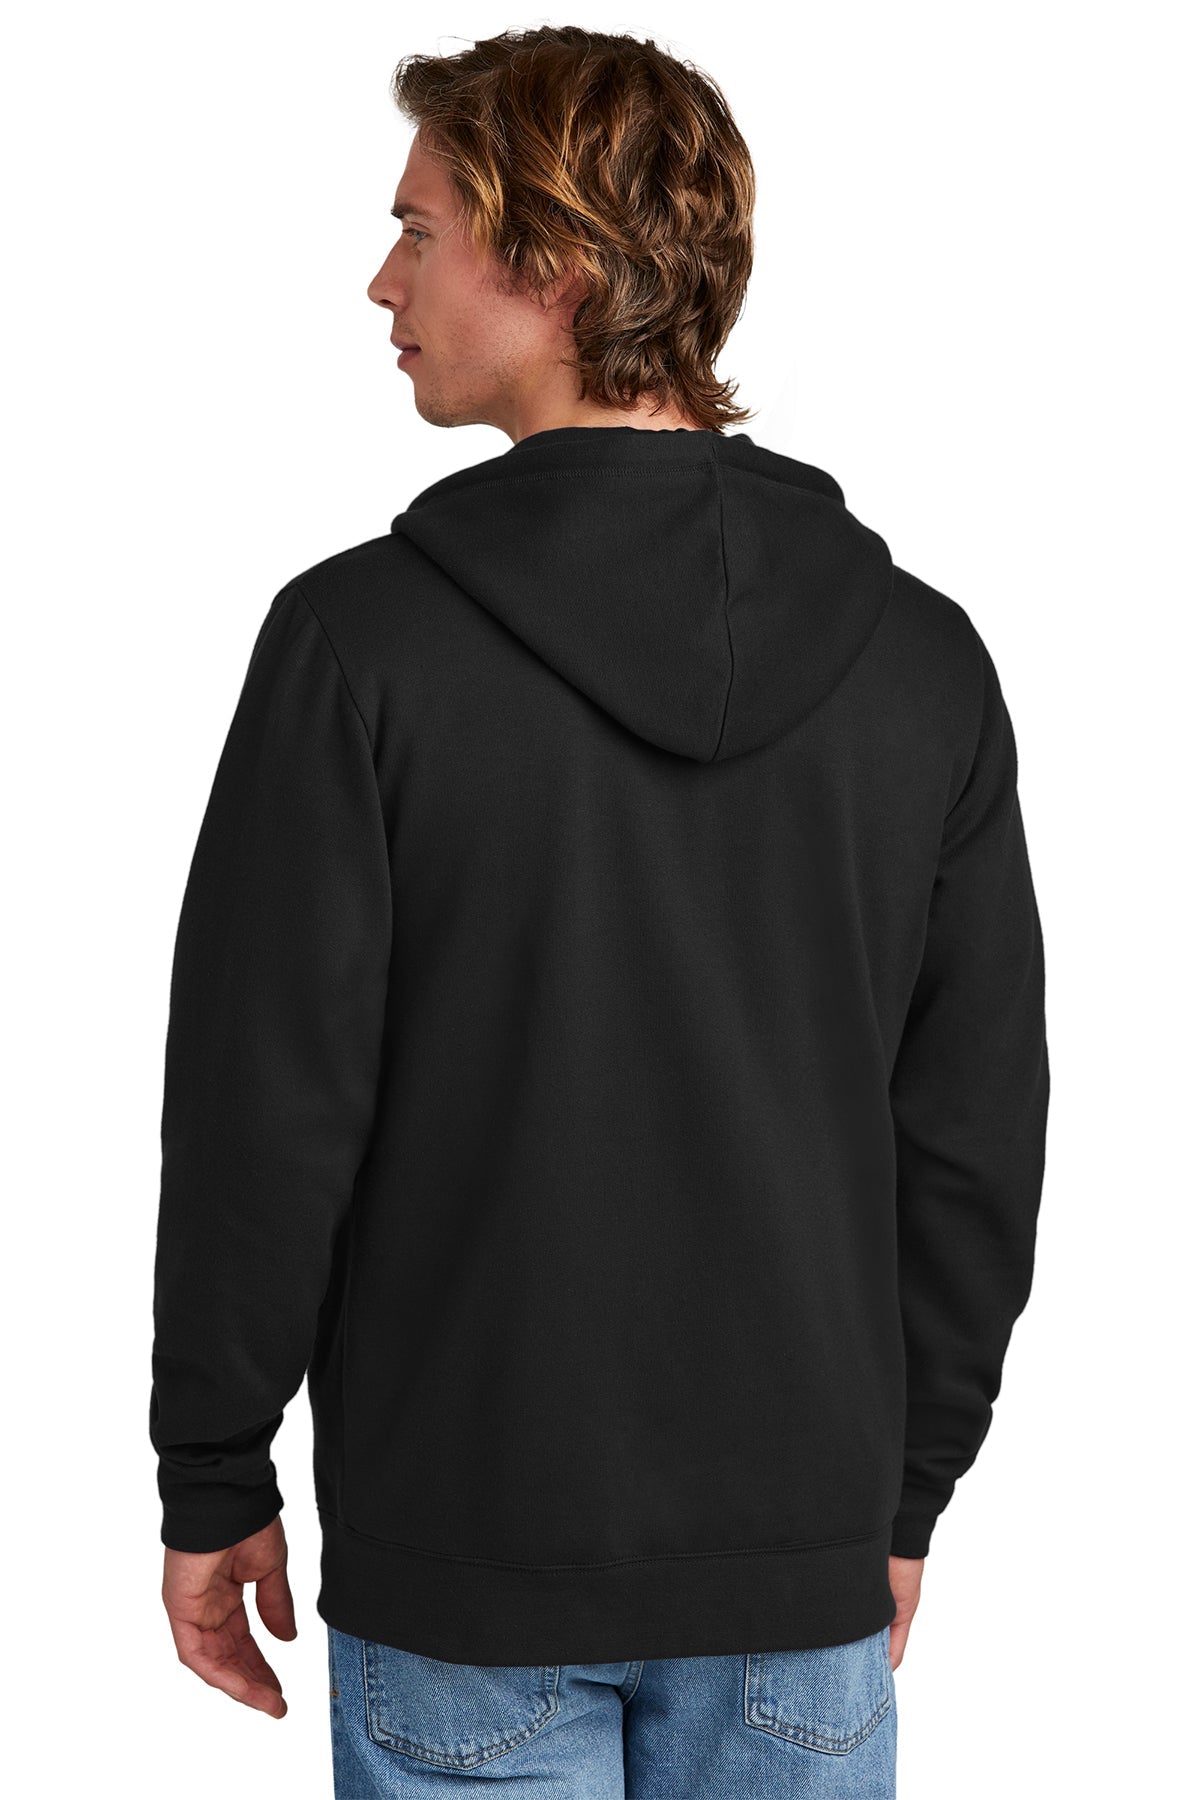 New Era Comeback Fleece Full-Zip Custom Hoodies, Black